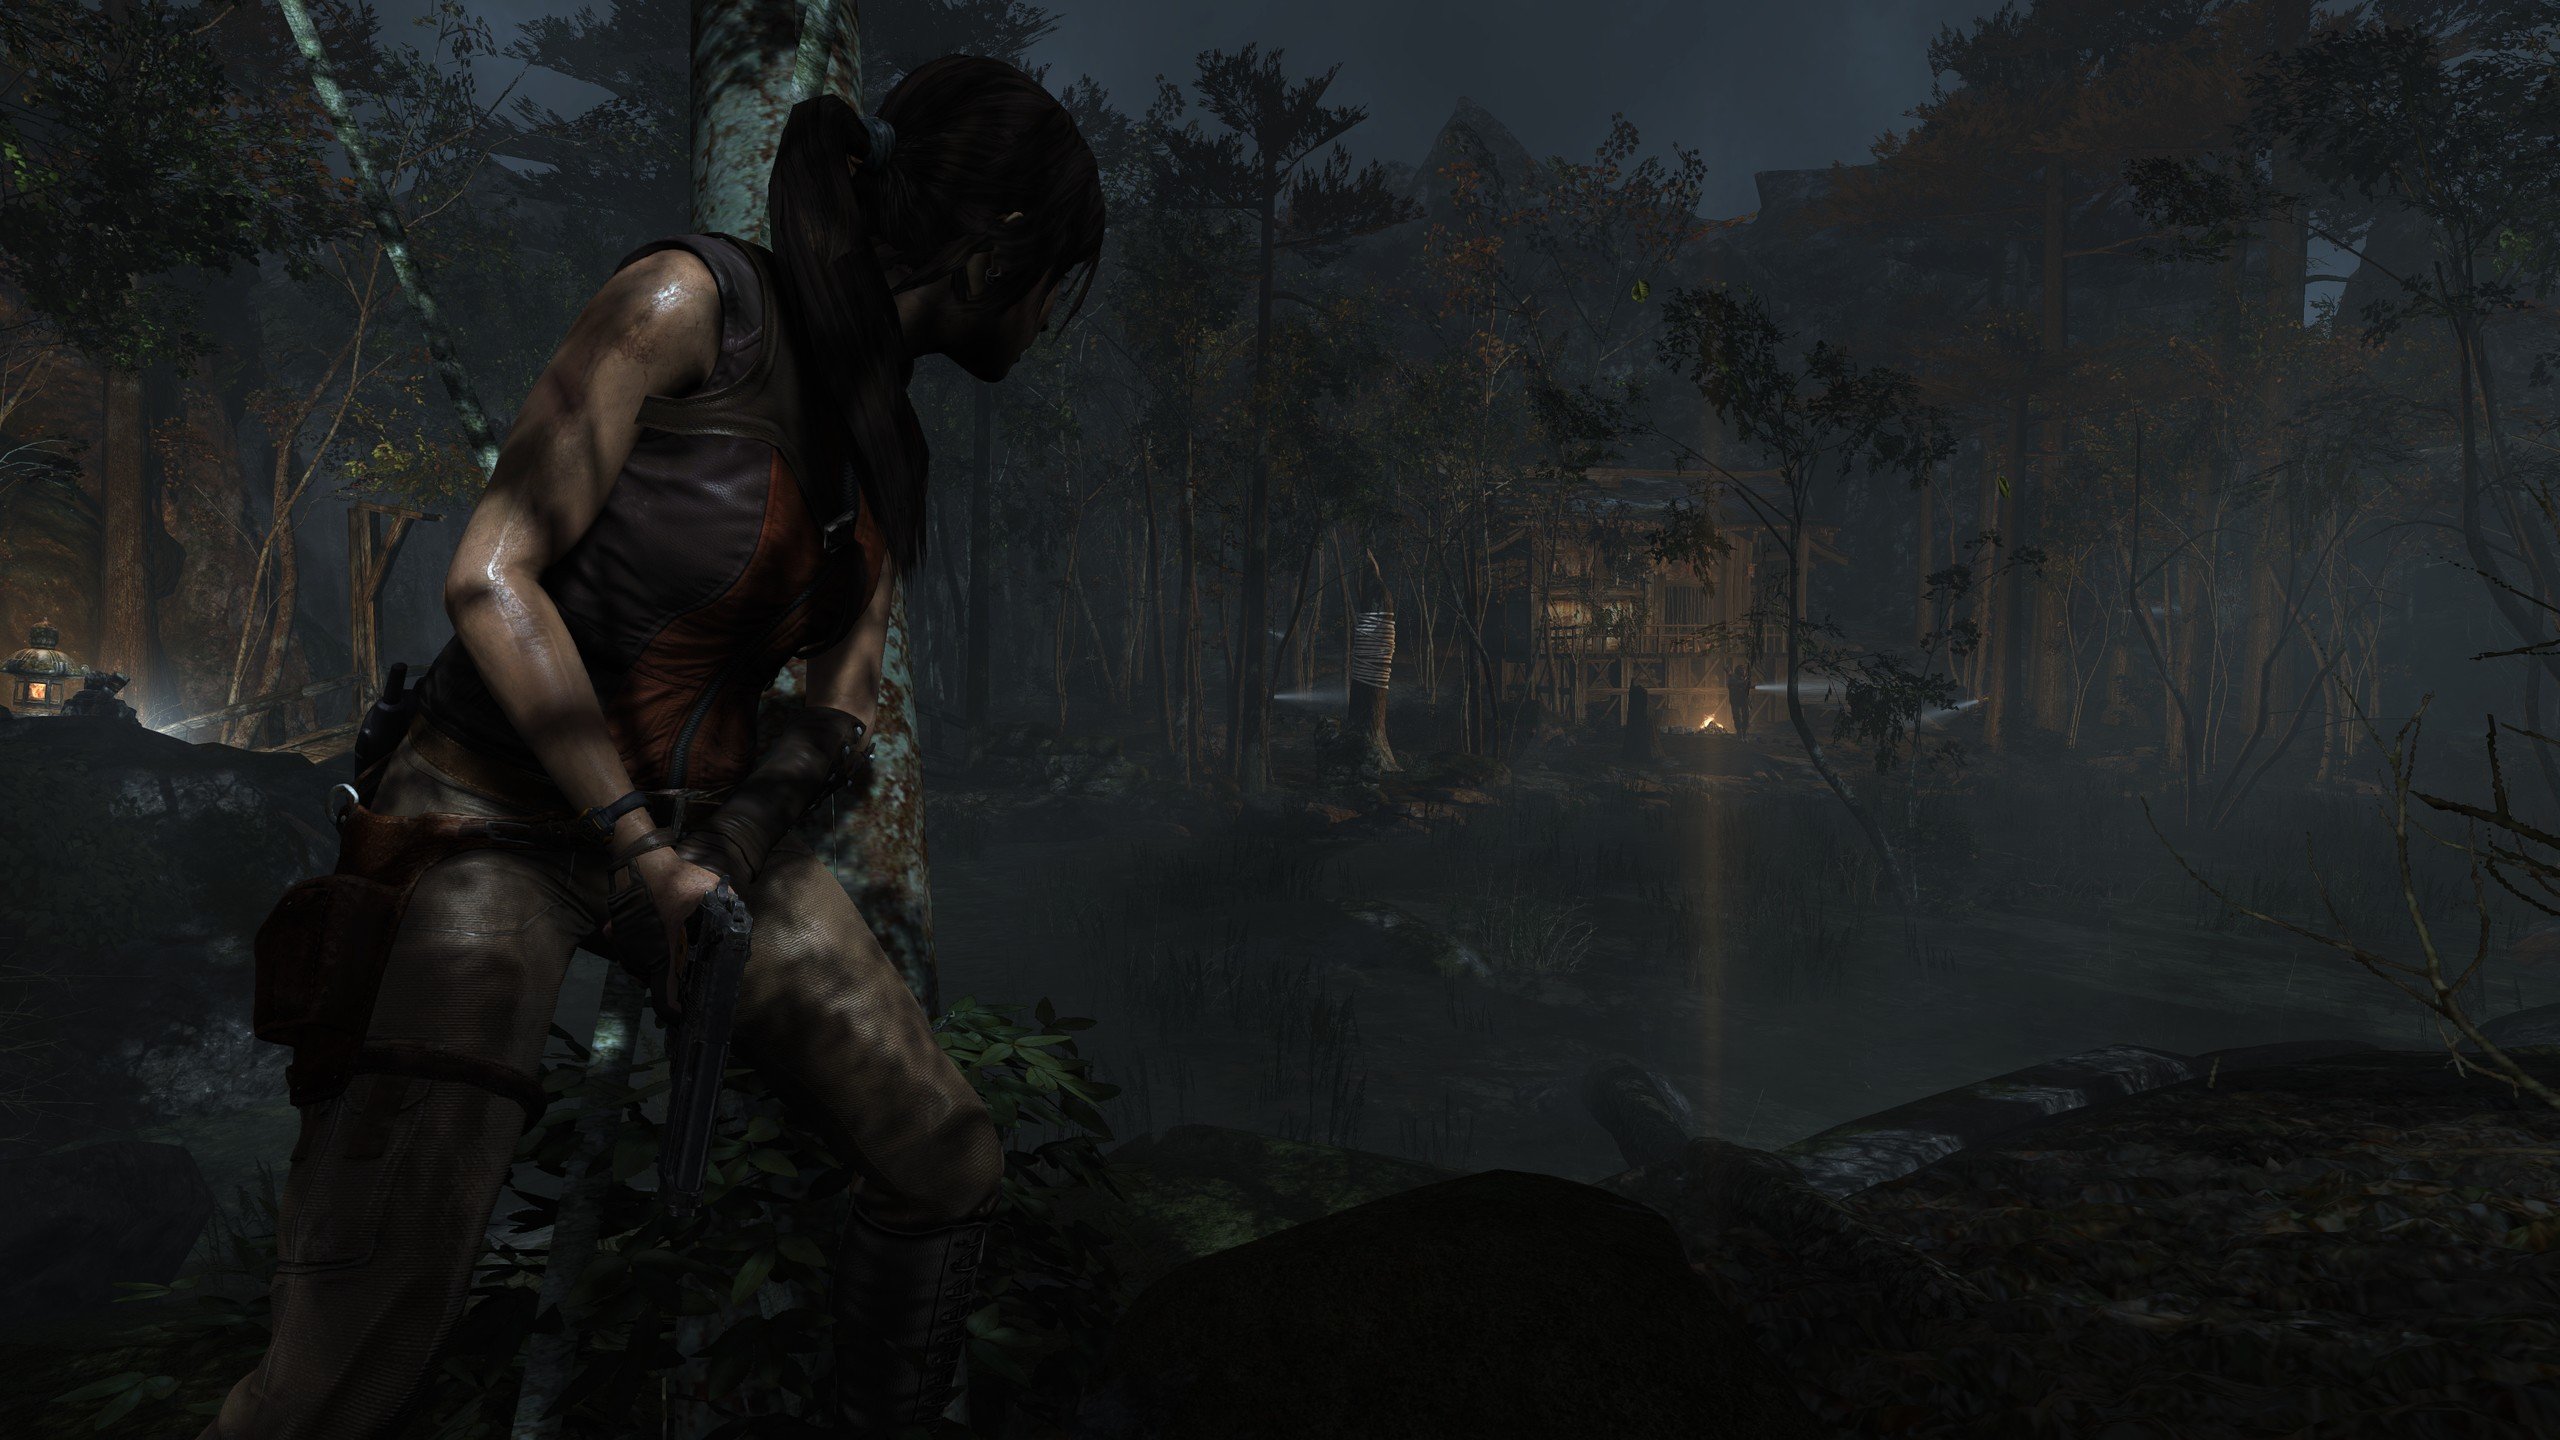 Download hd 2560x1440 Tomb Raider (Lara Croft) desktop background ID:437166 for free